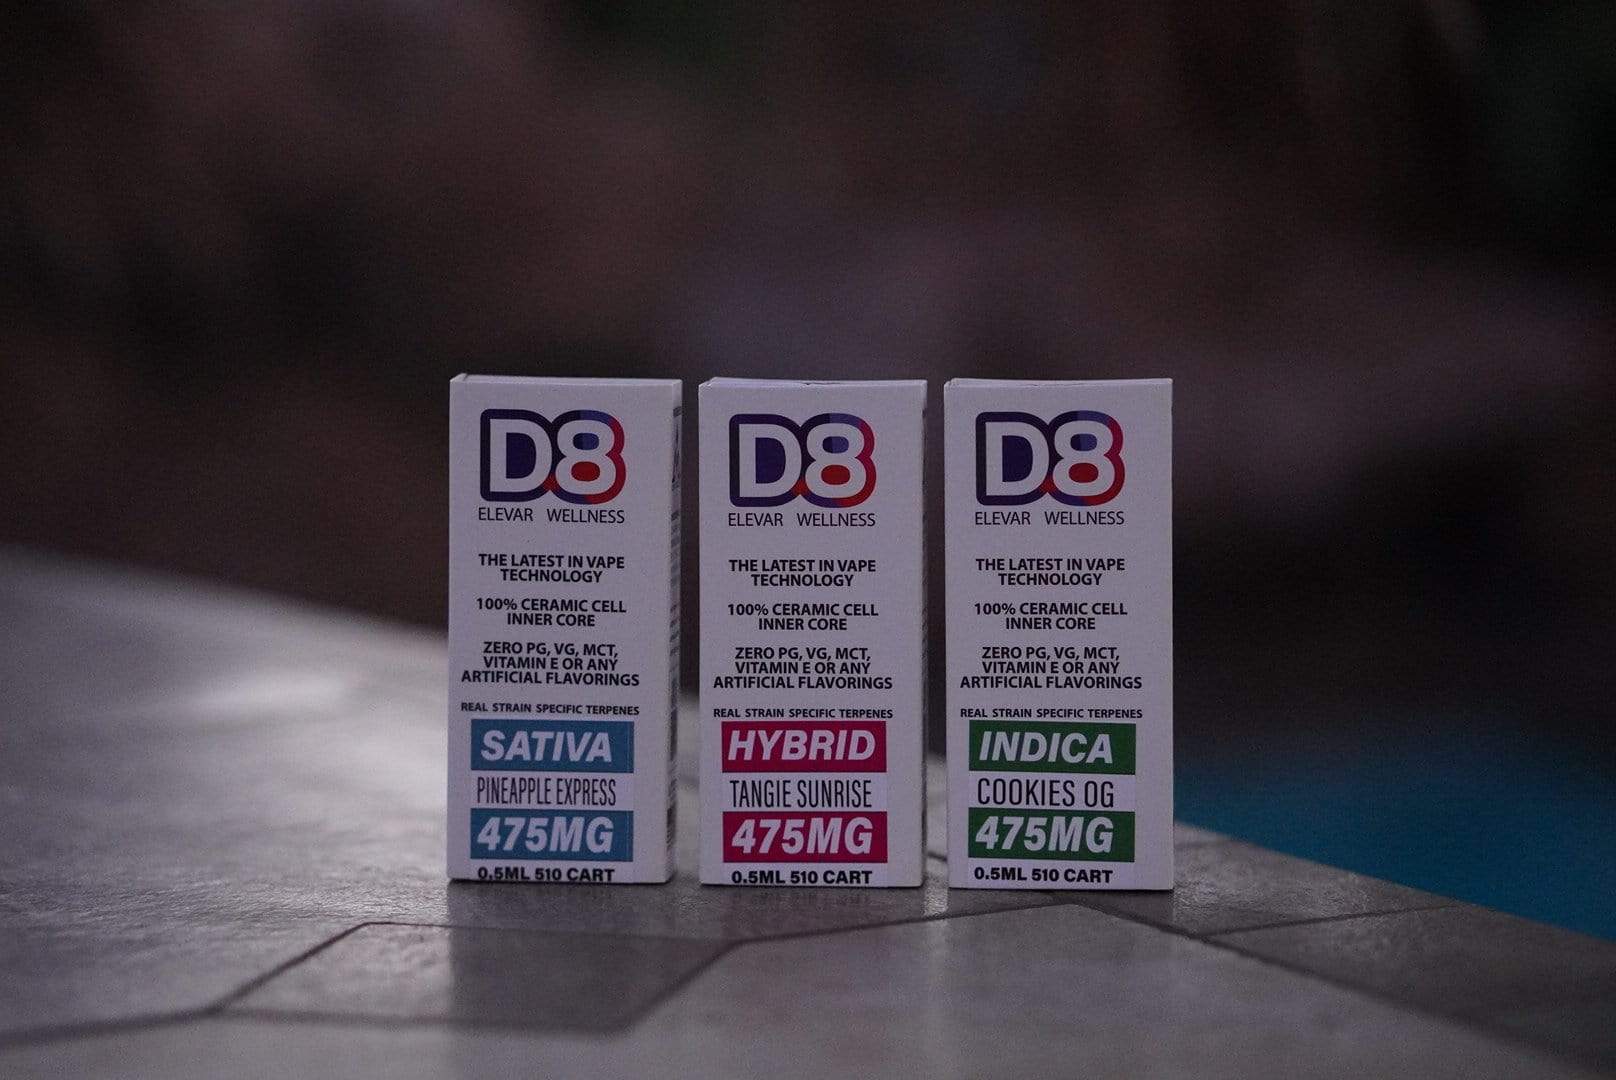 Fenix CBD, Elevar Wellness Delta 8 (D8) Cartridges in Indica, Hybrid and Sativa in Los Angeles, CA; ships nationally